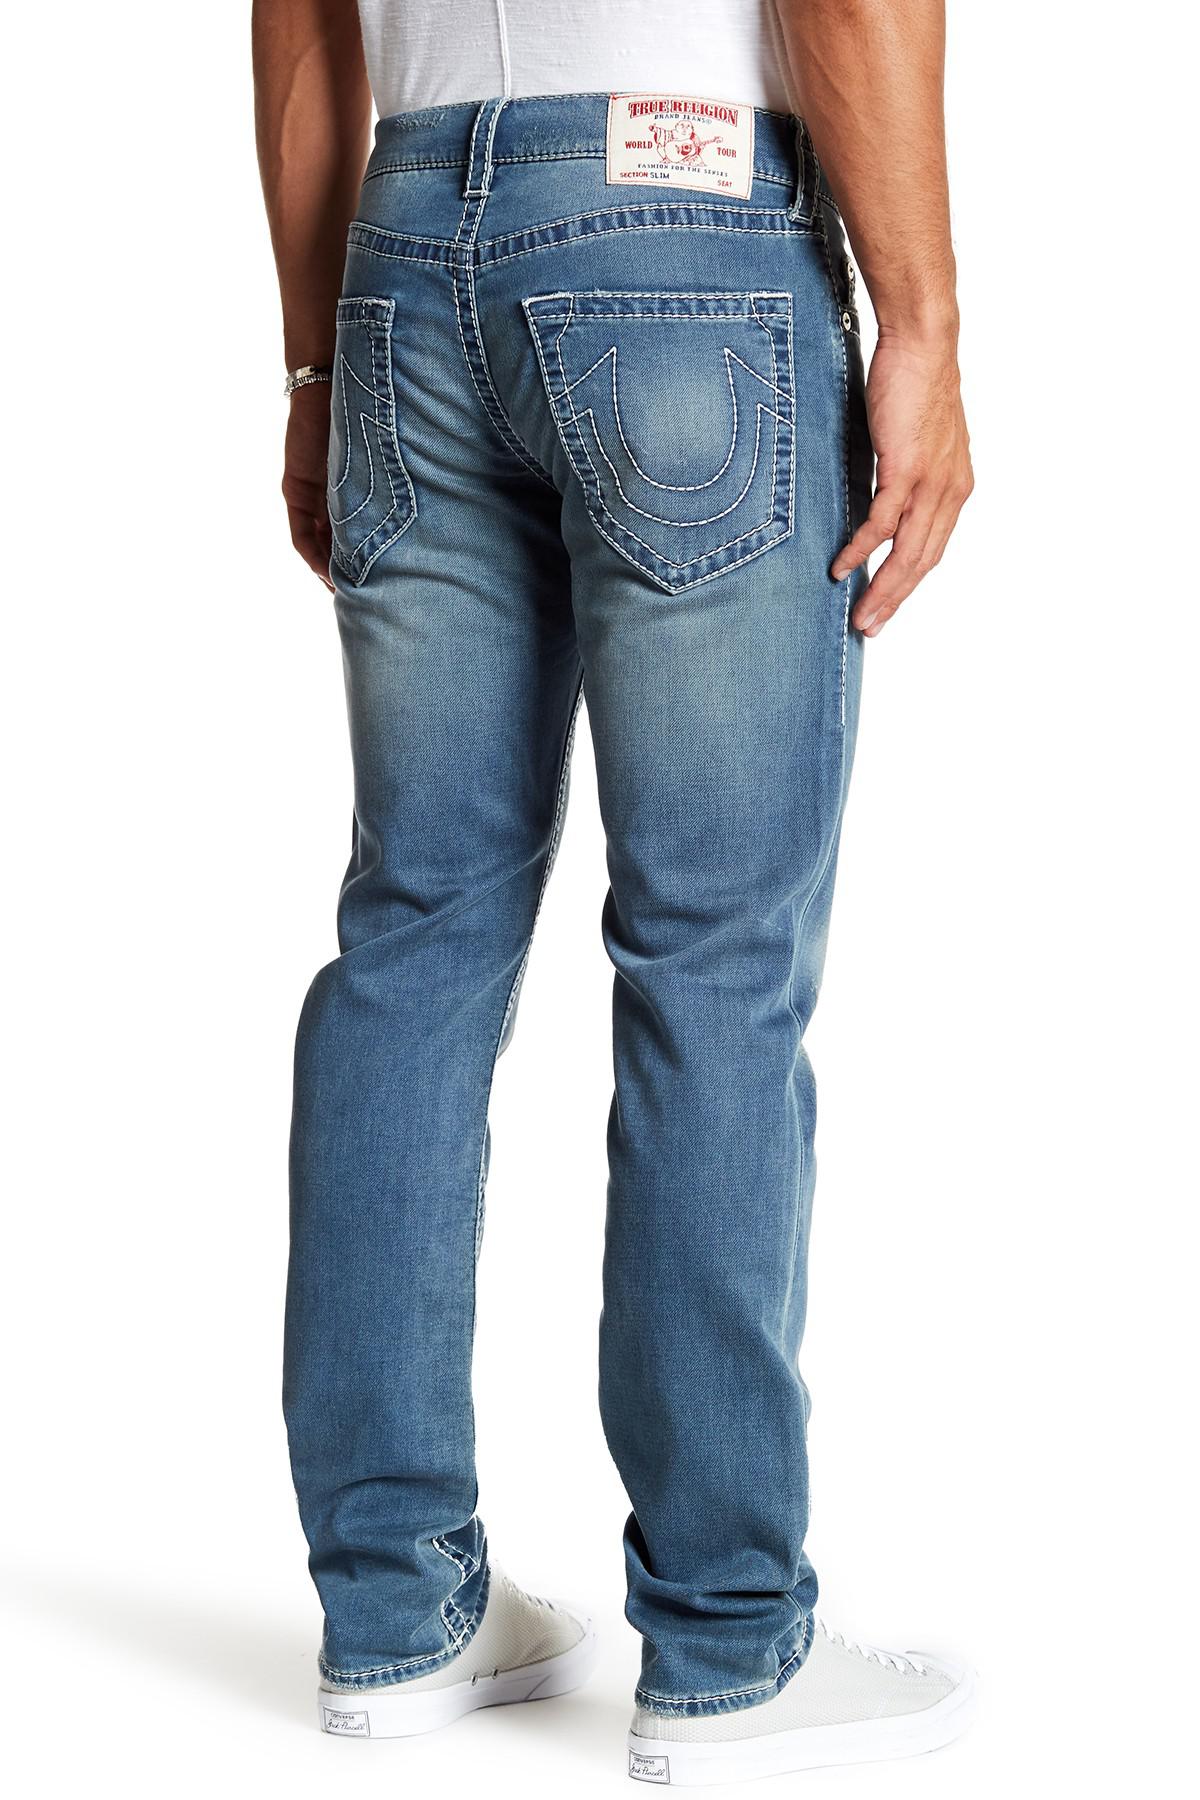 Lyst - True Religion Faded Slim Jeans in Blue for Men